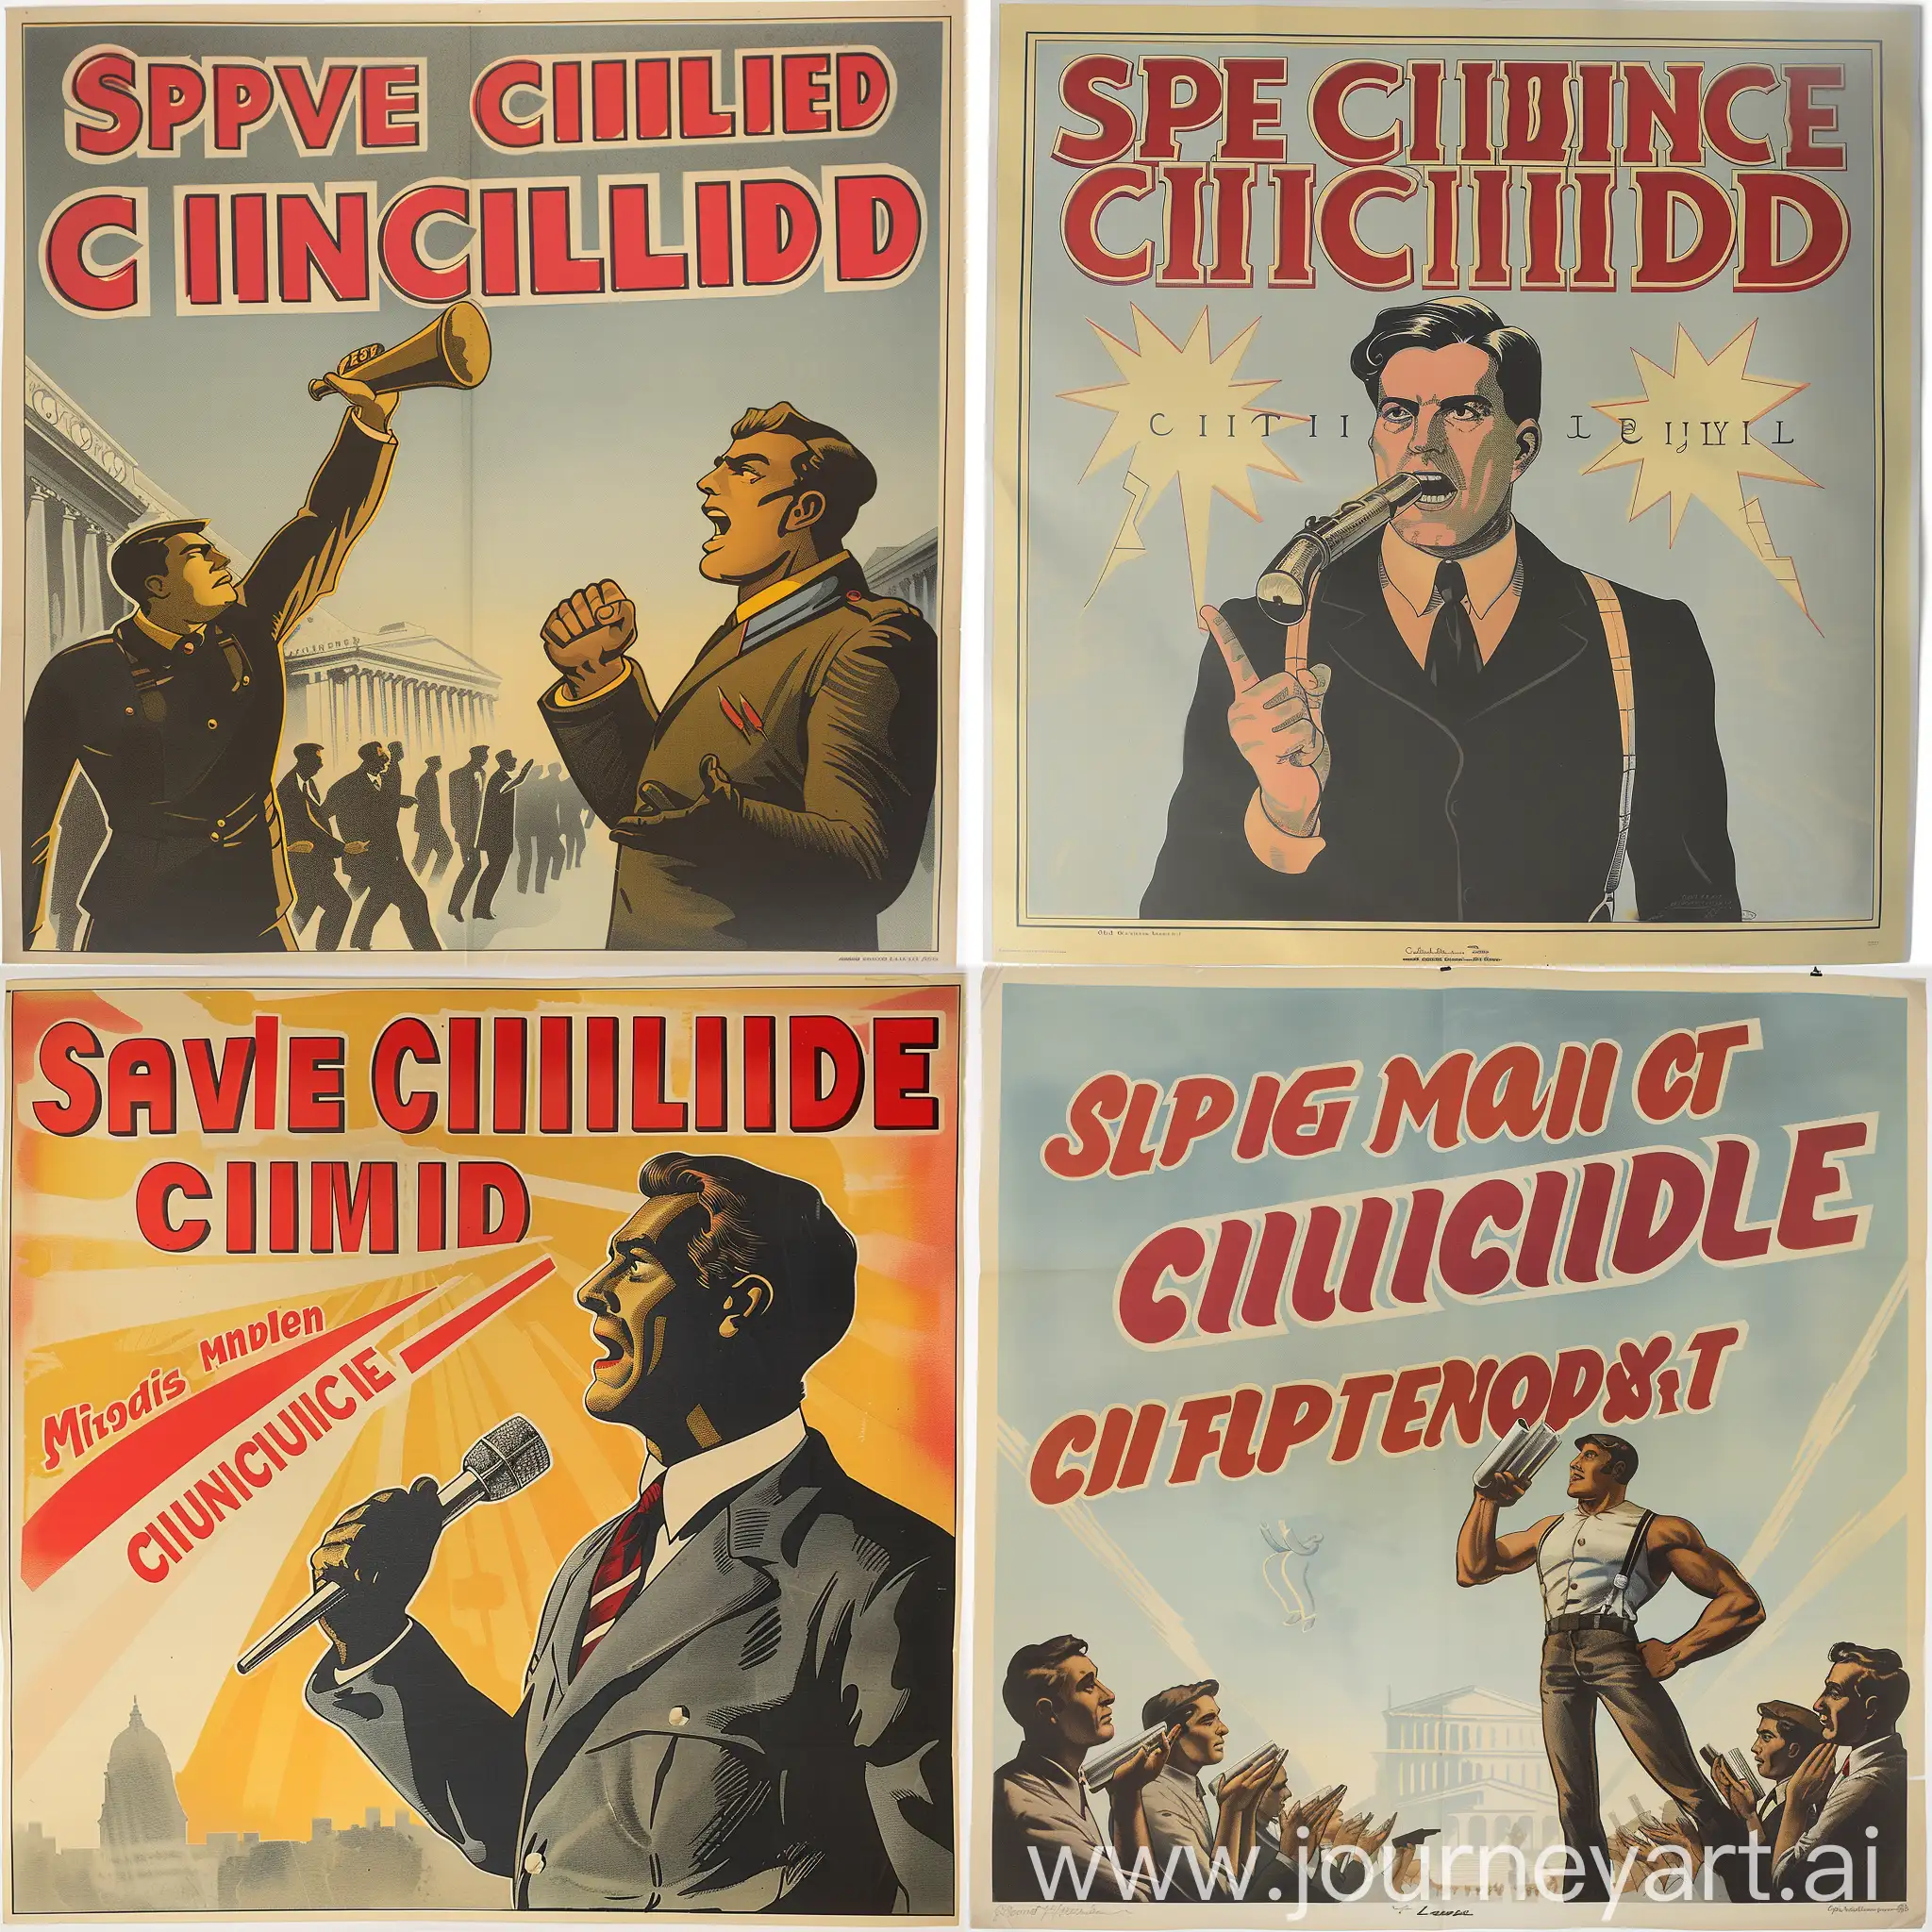 Promote-Civilized-Language-and-Habits-Inspiring-Propaganda-Poster